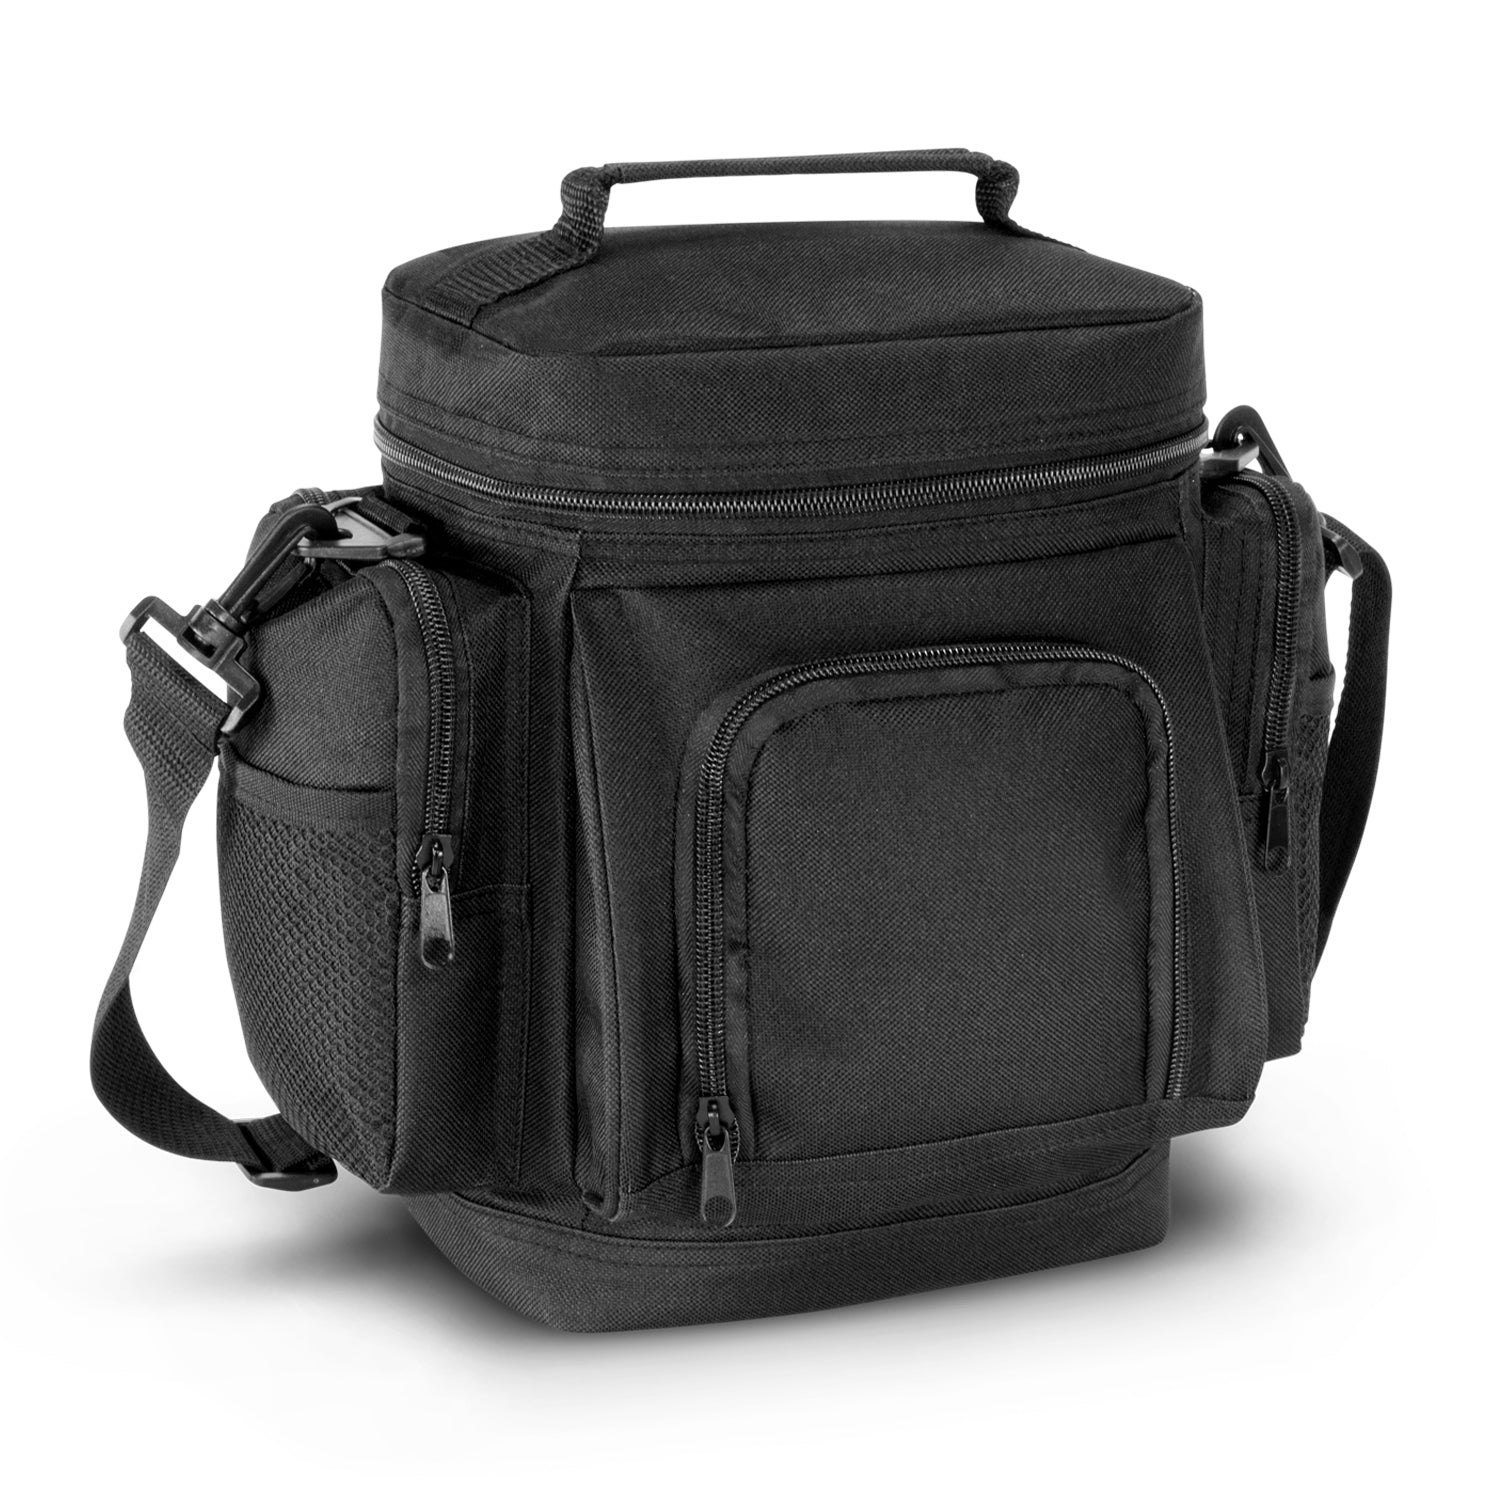 Clearance Premium Laguna Cooler Bag in Black(CSNB-83T) - greenpac.com.au